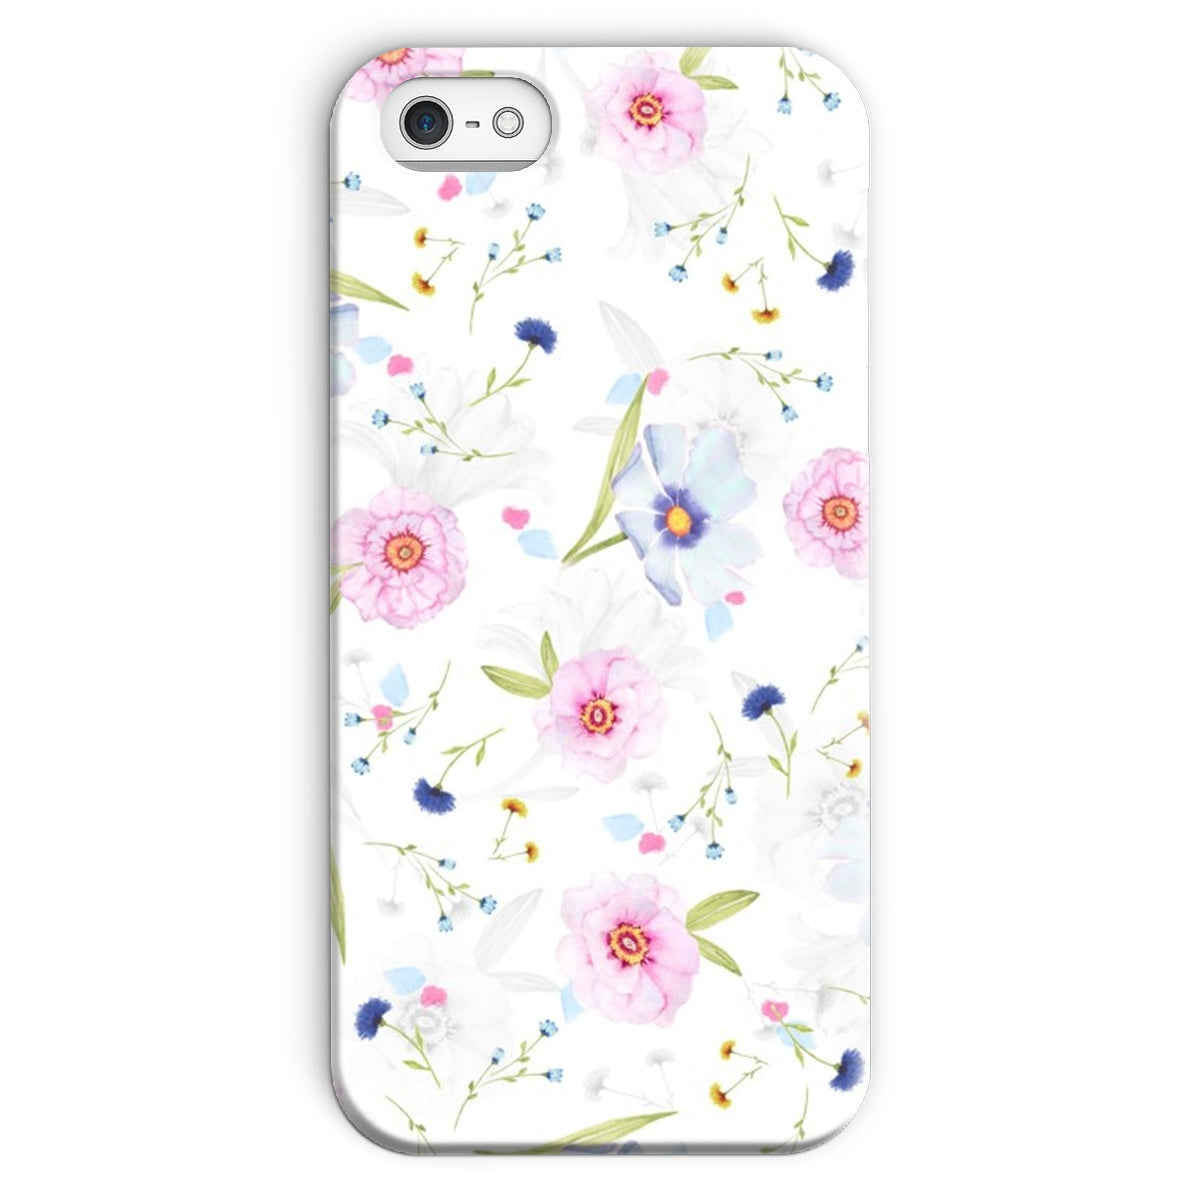 FlowerBG Snap Phone Case